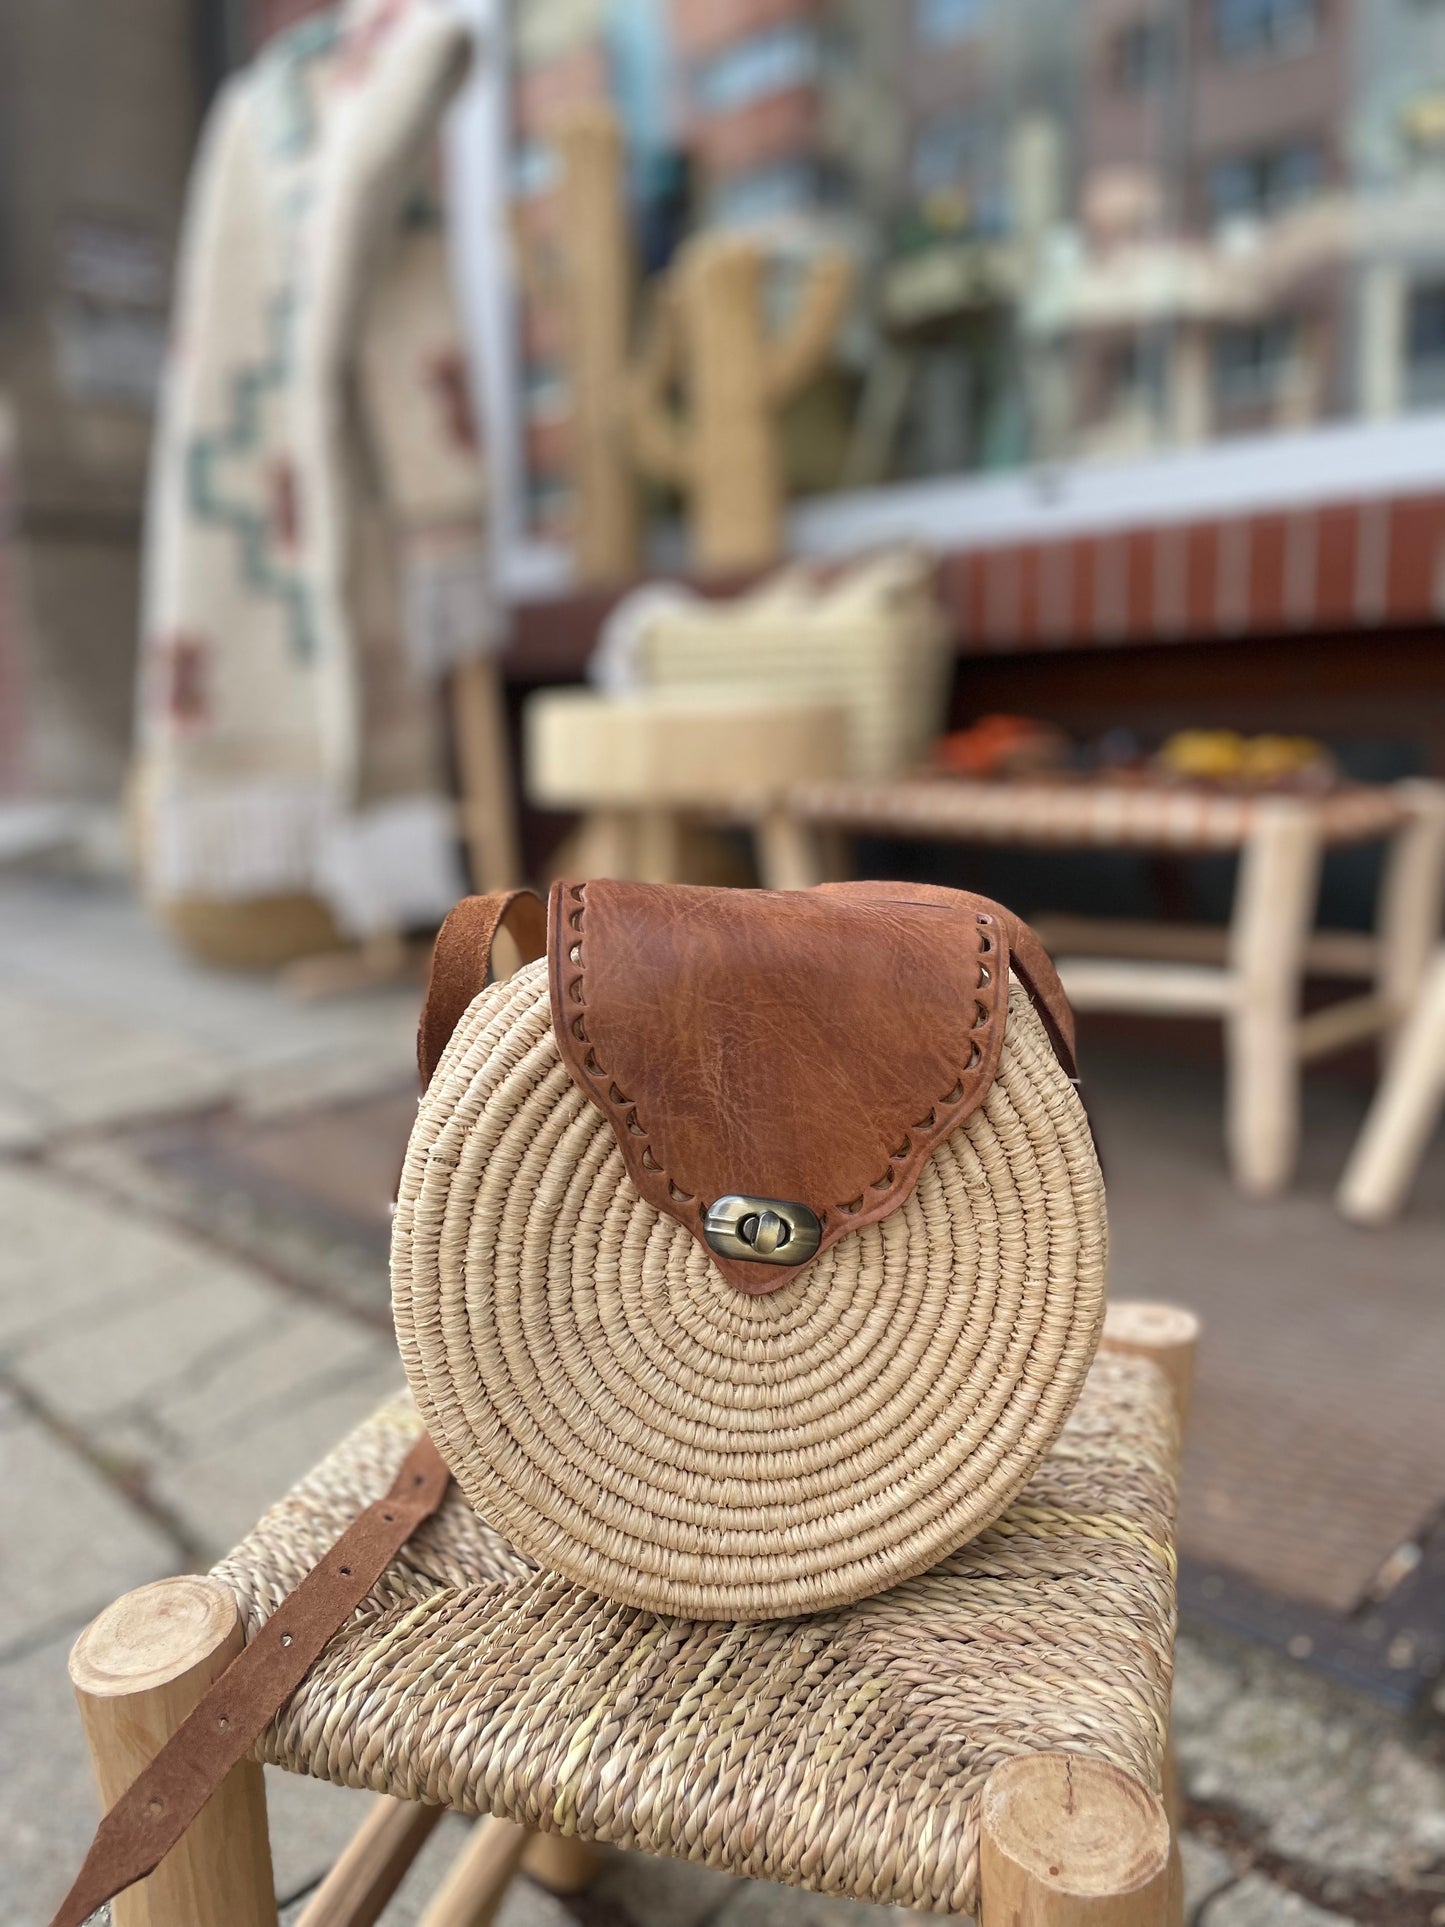 Round leather handbag